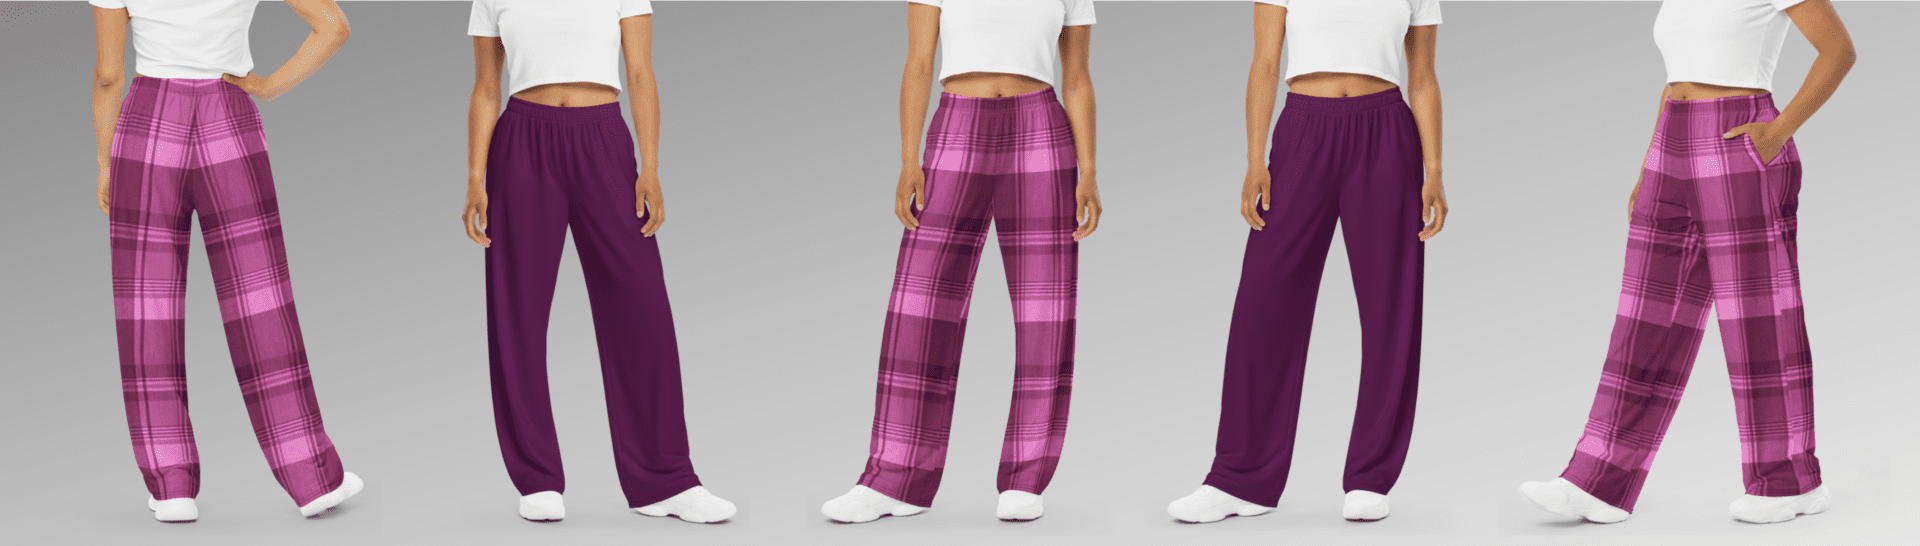 Women wearing pink and purple plaid pants.